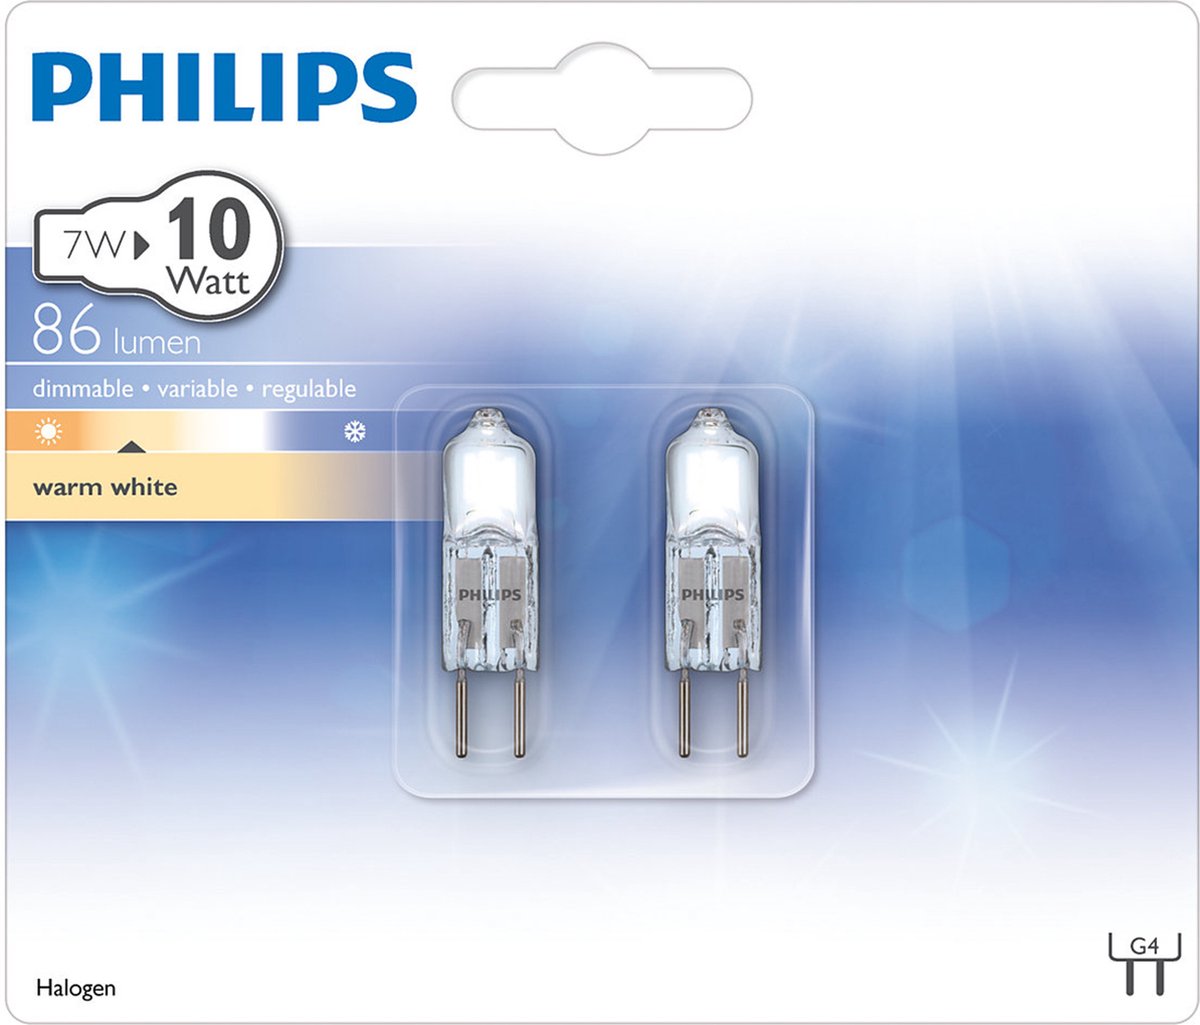 Philips 12V Halogeenlamp G4 - 7W (10W) - Warm Wit Licht - Dimbaar - 2 stuks  | bol.com